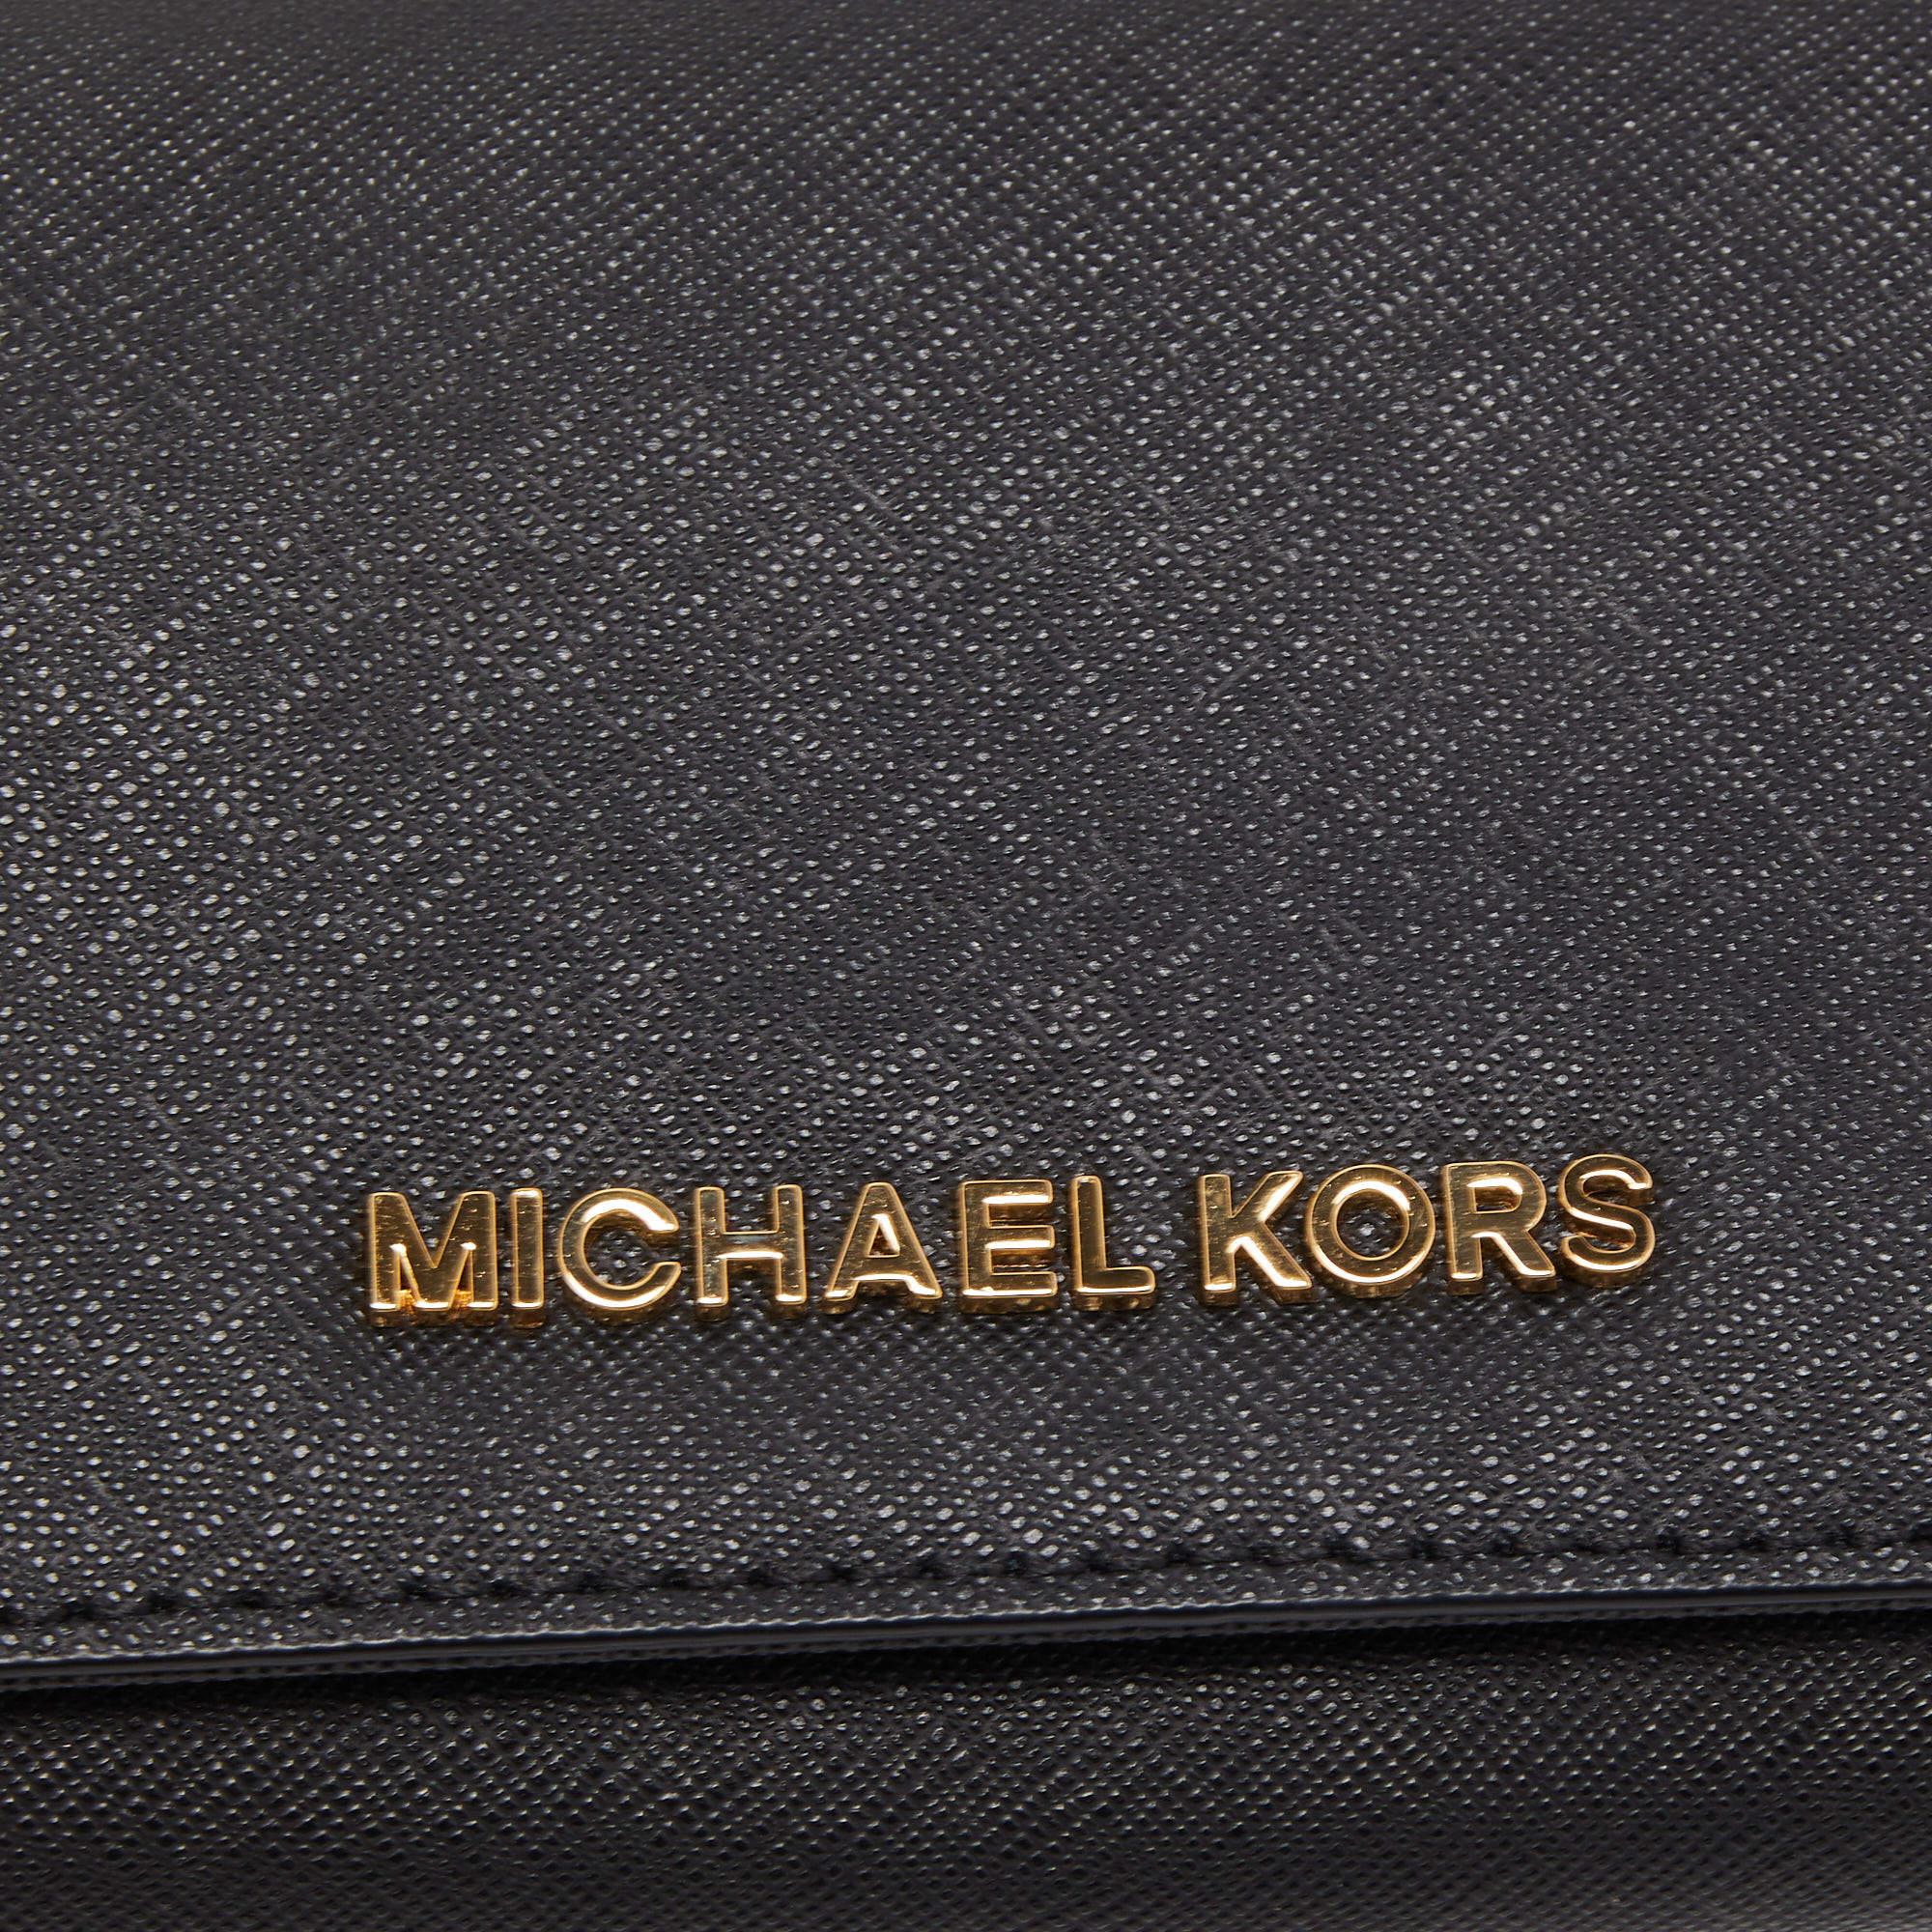 Michael Kors Black Leather Flap Continental Wallet 1